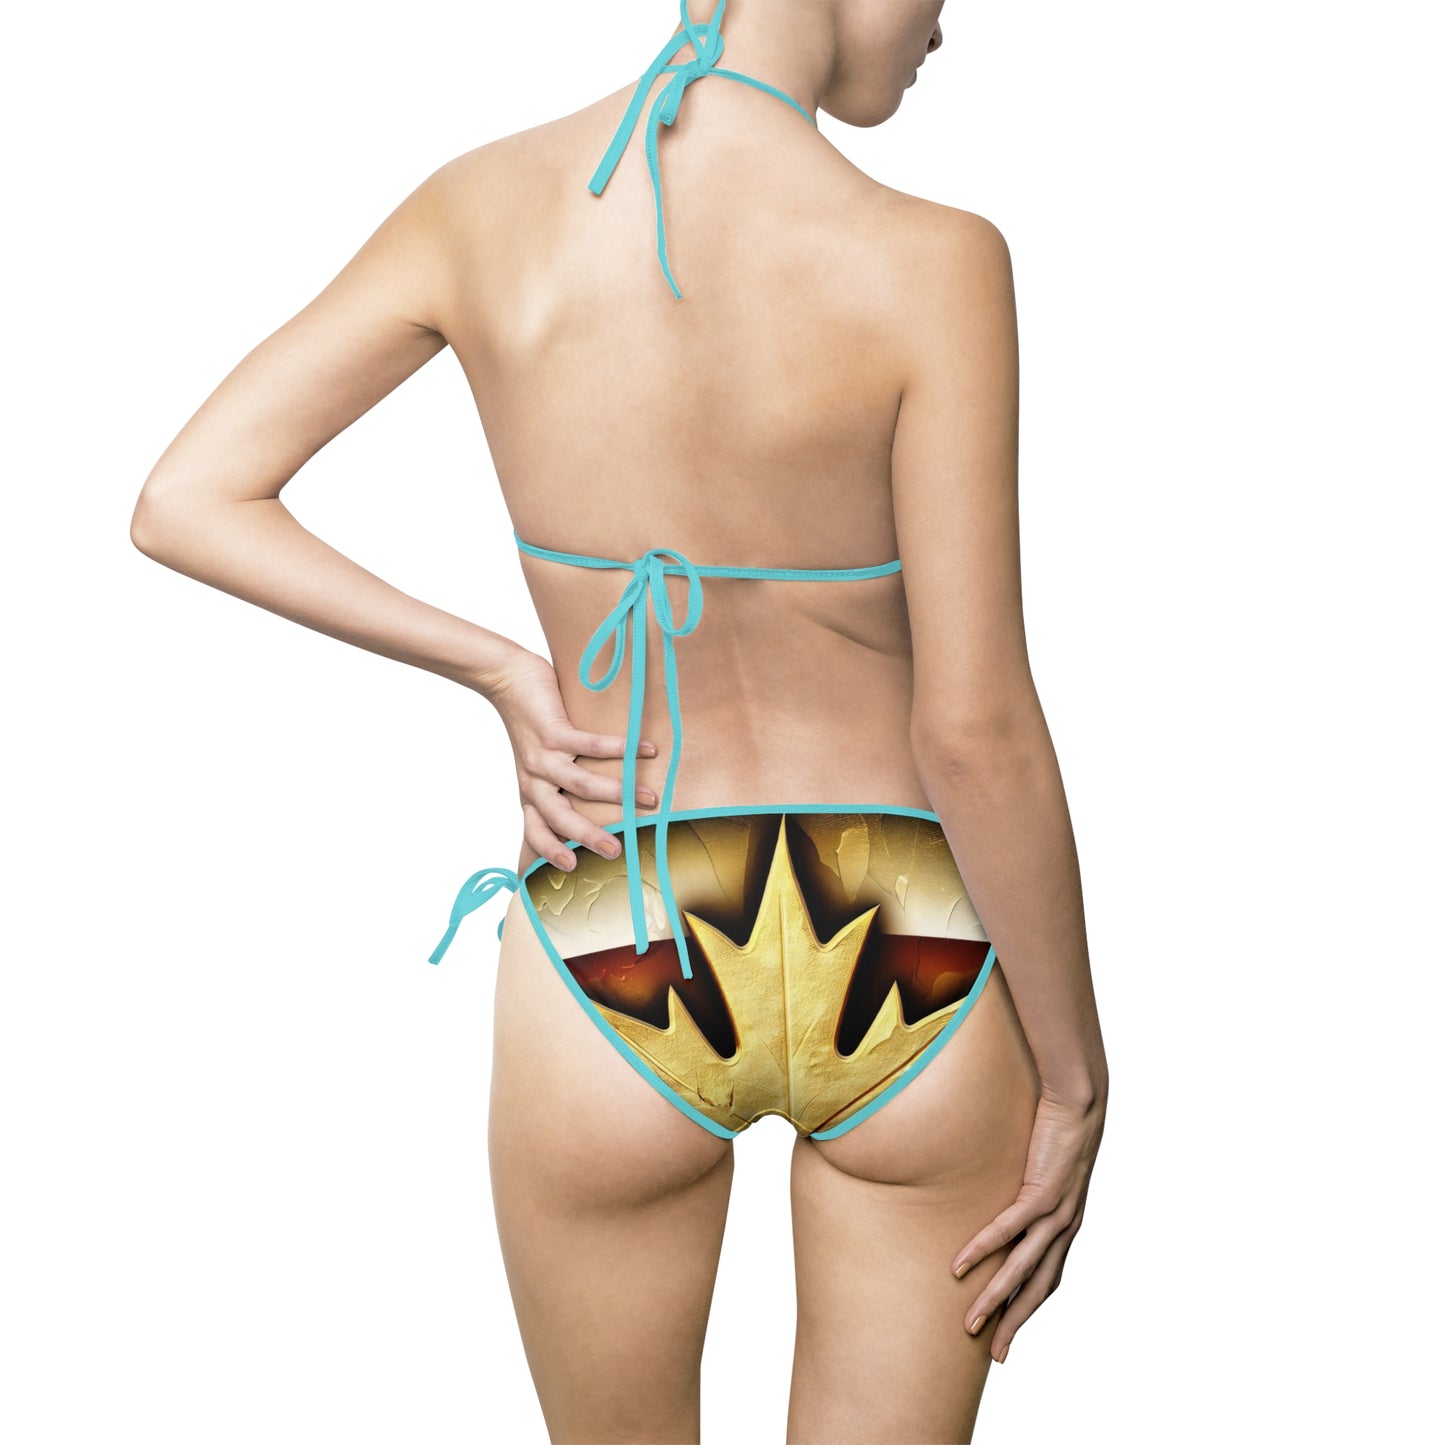 Fashion Women's Bikini Swimsuit - Rustic-Gold Maple Leaf Swimwear Design